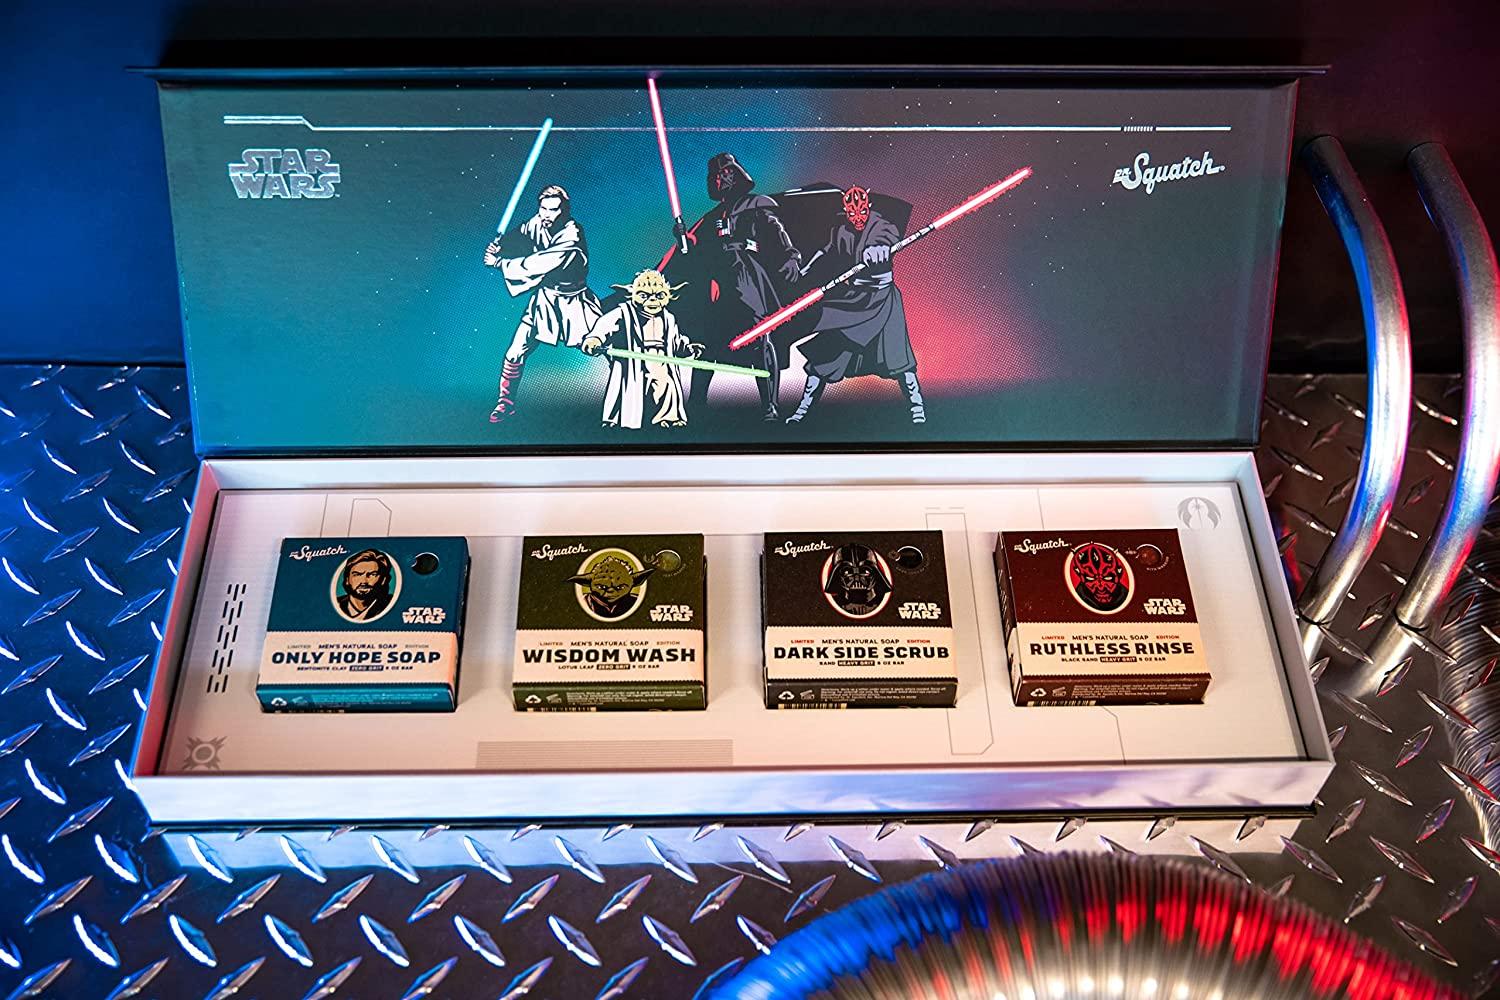 Vintage Star Wars Soap Bars - Set of 7 in Box - Omni Cosmetics